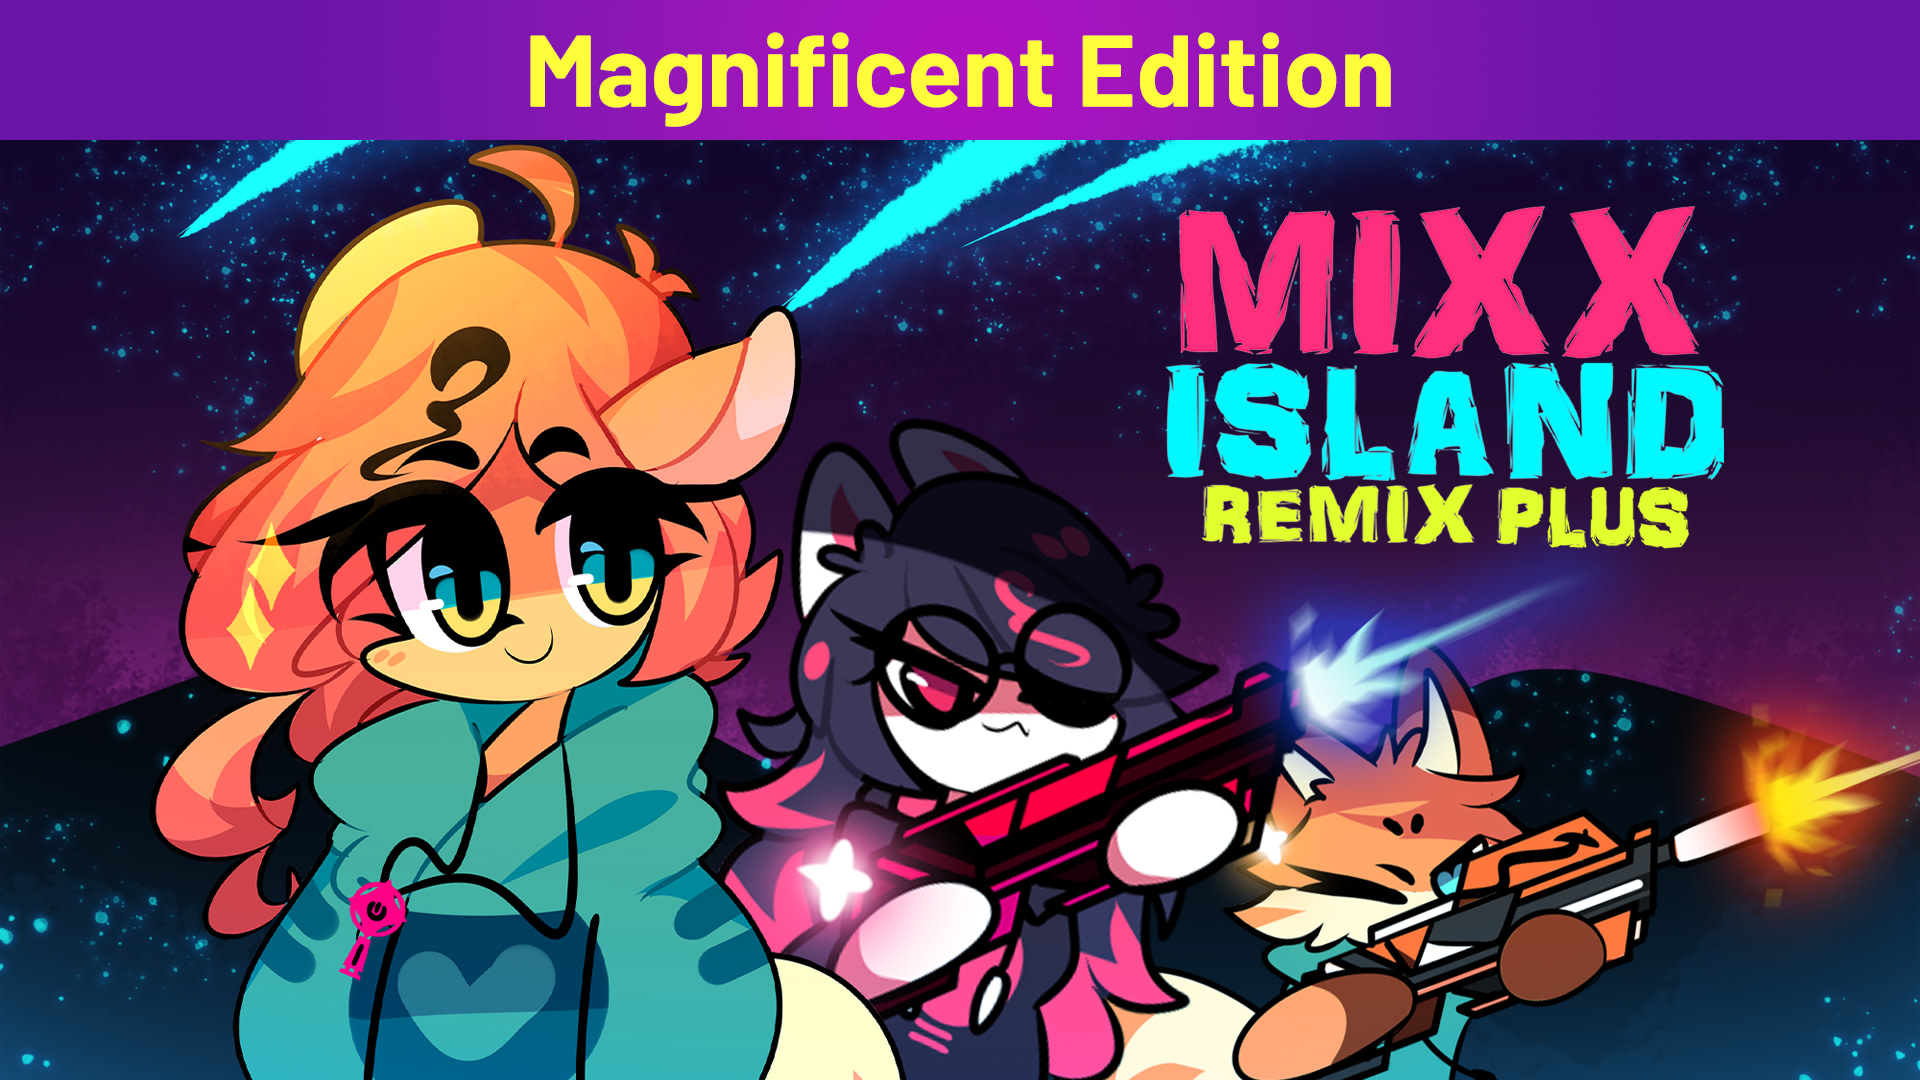 Mixx Island: Remix Plus Magnificent Edition